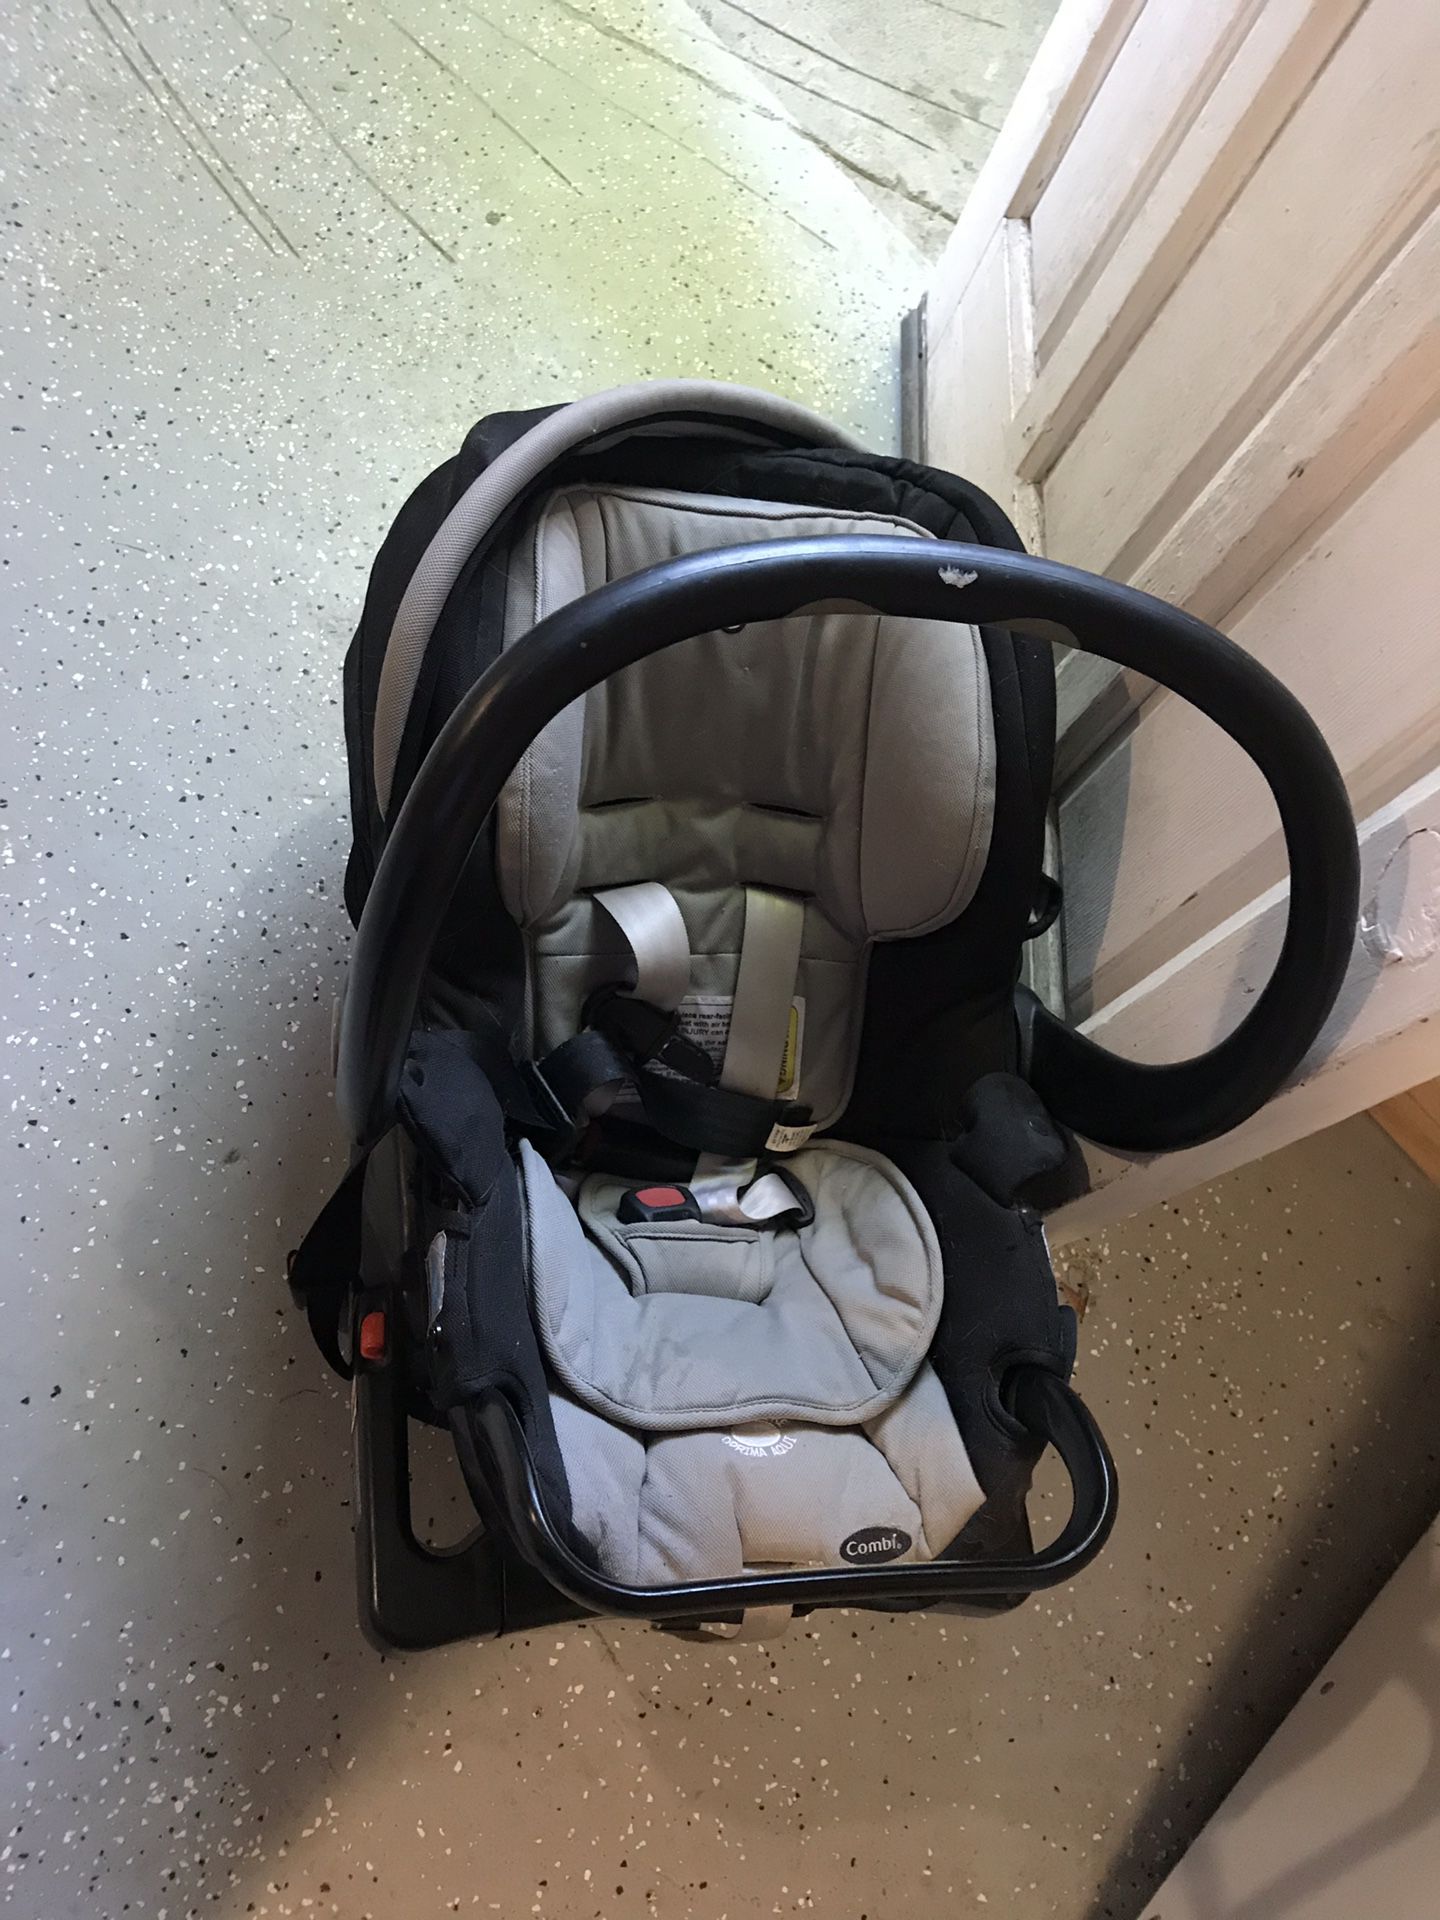 Smaller baby car seat